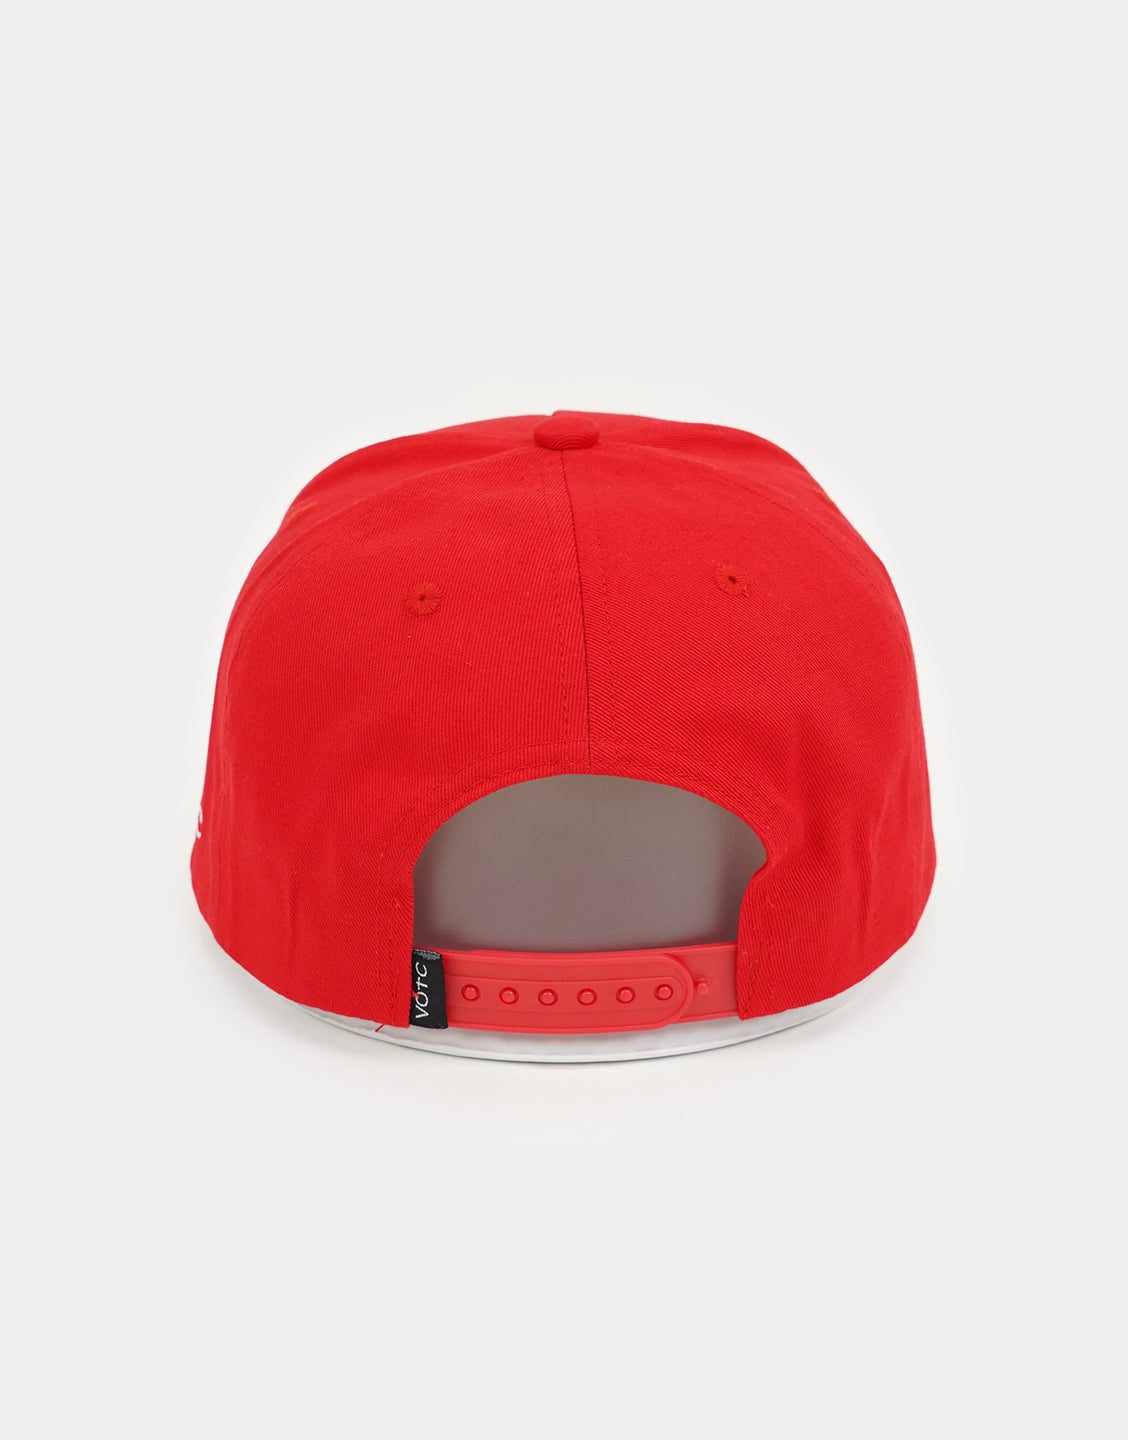 Trust God Premium Baseball Hat - Red - VOTC Clothing